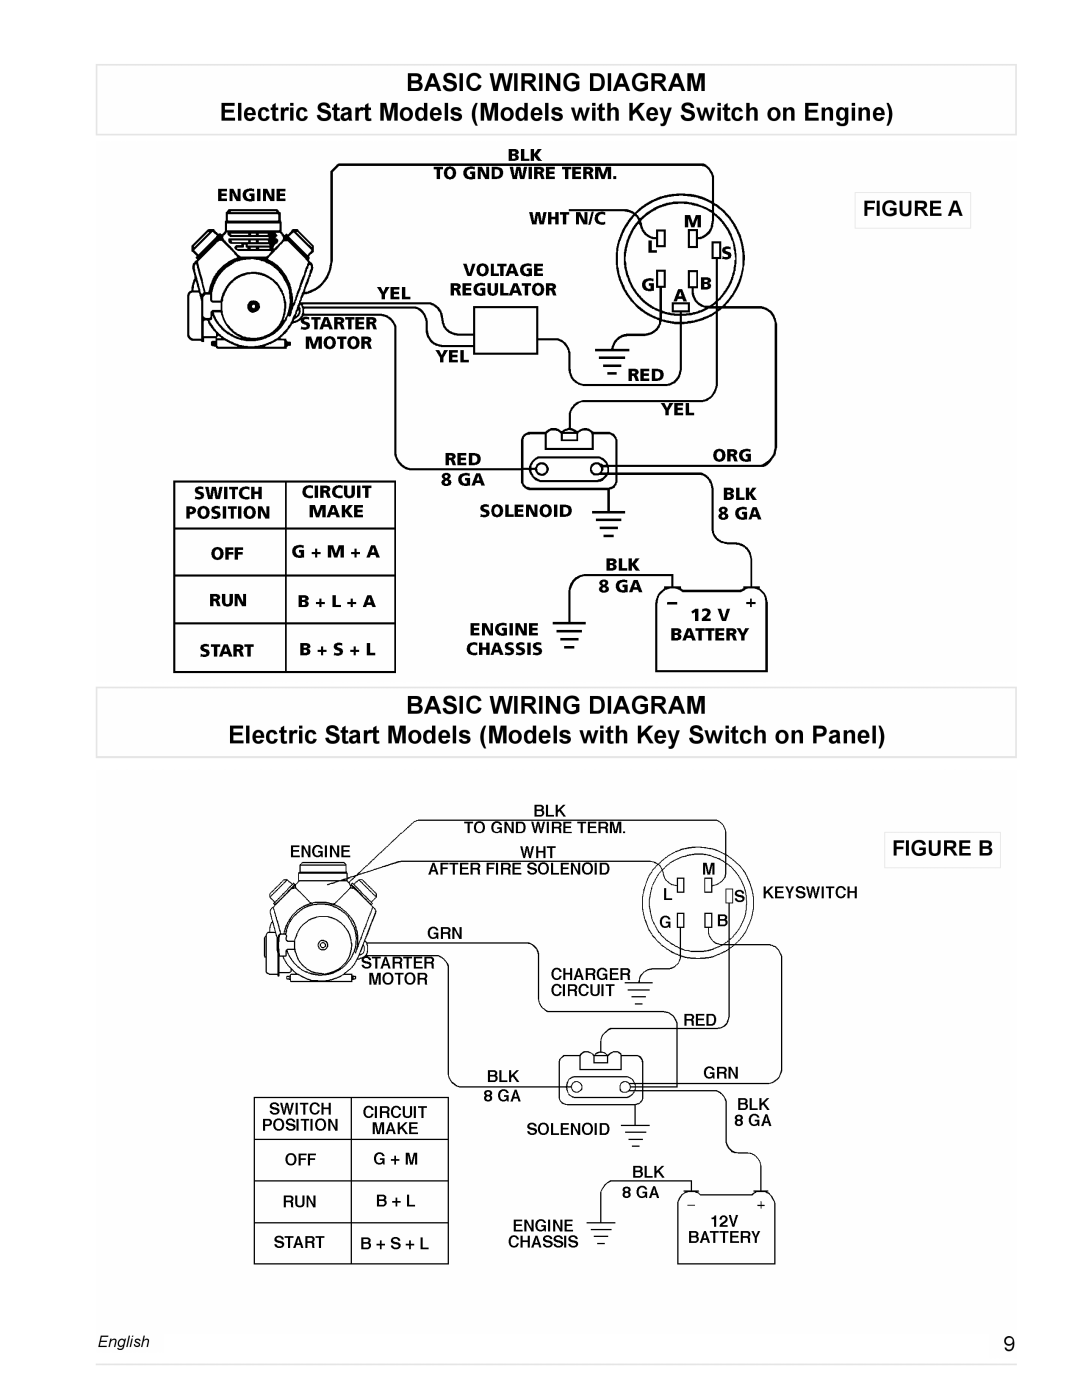 Powermate PC0477023, PL0473503, PM0478022, PM0473503, PM0477022, PM0474203 Basic Wiring Diagram, Figure A, Figure B, English 